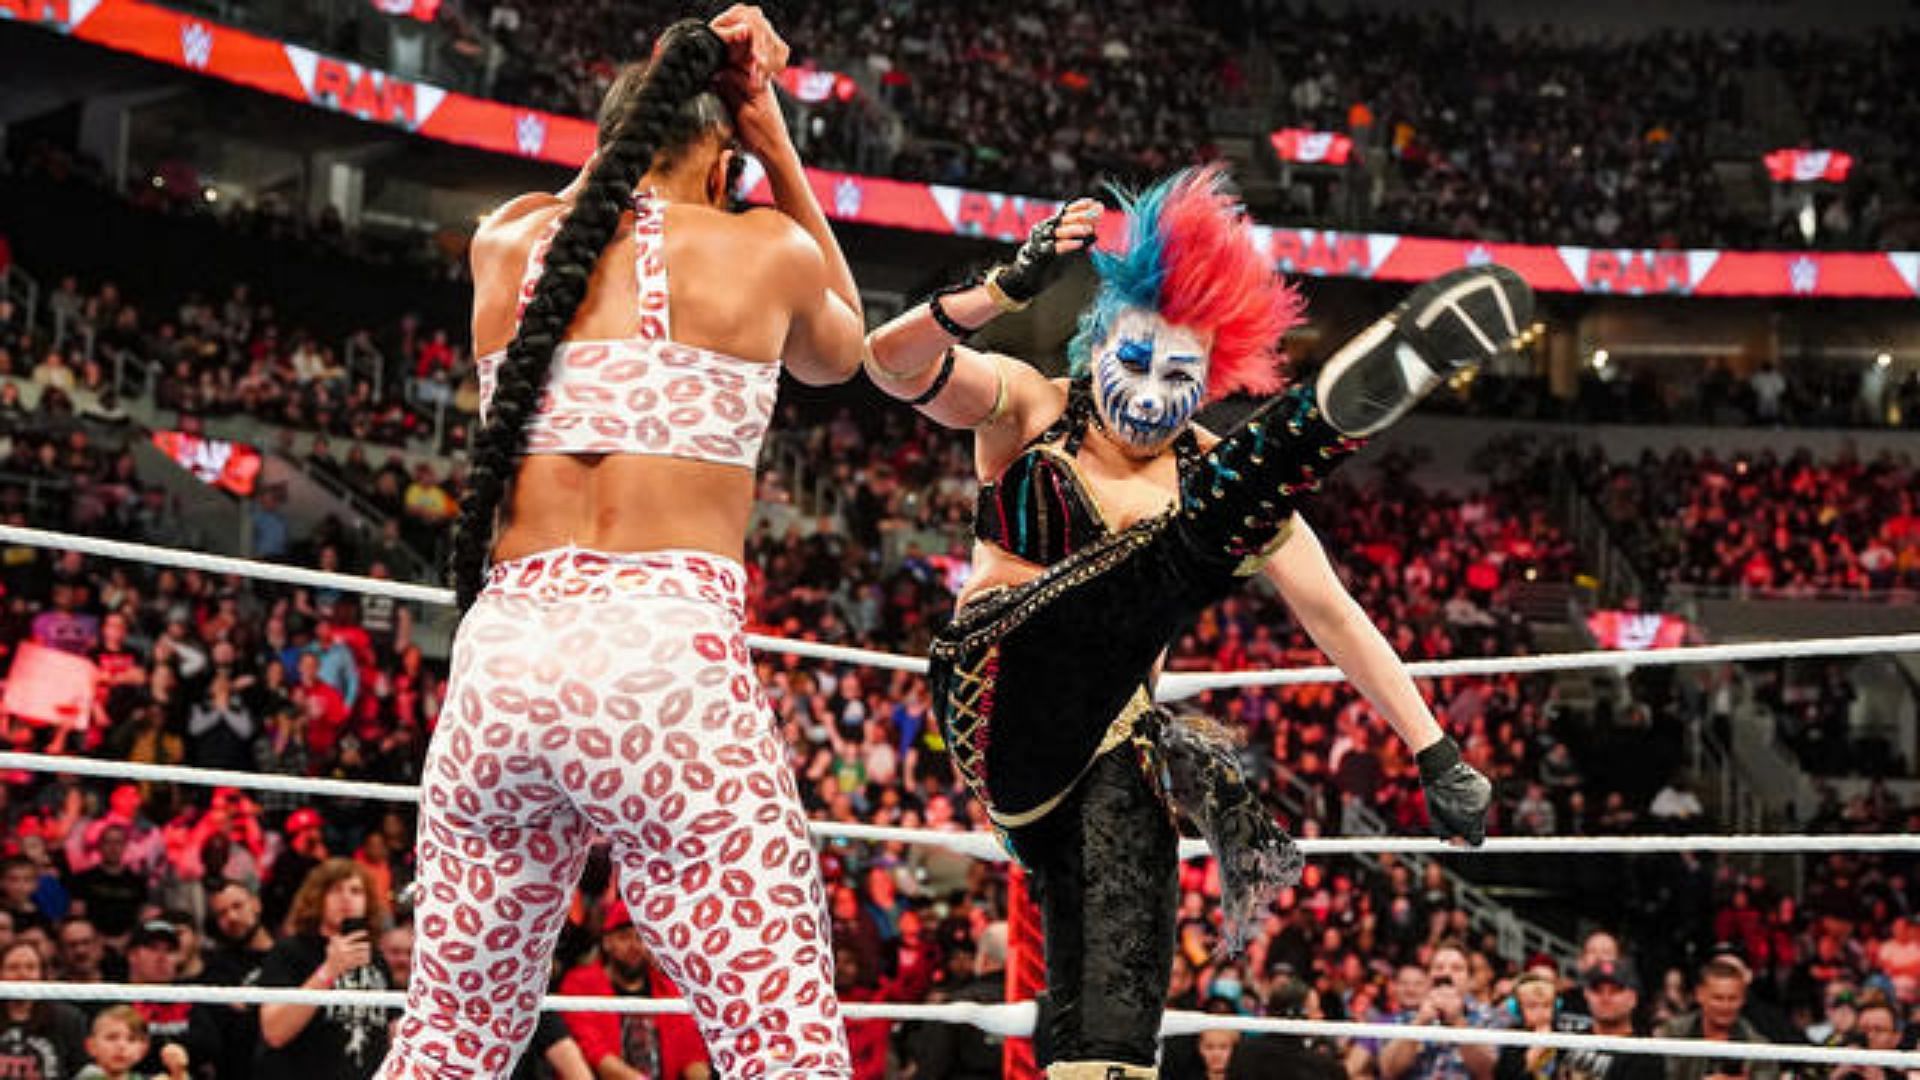 Asuka faces Bianca Belair at WrestleMania, but has been battling her &quot;fans&quot; all weekend